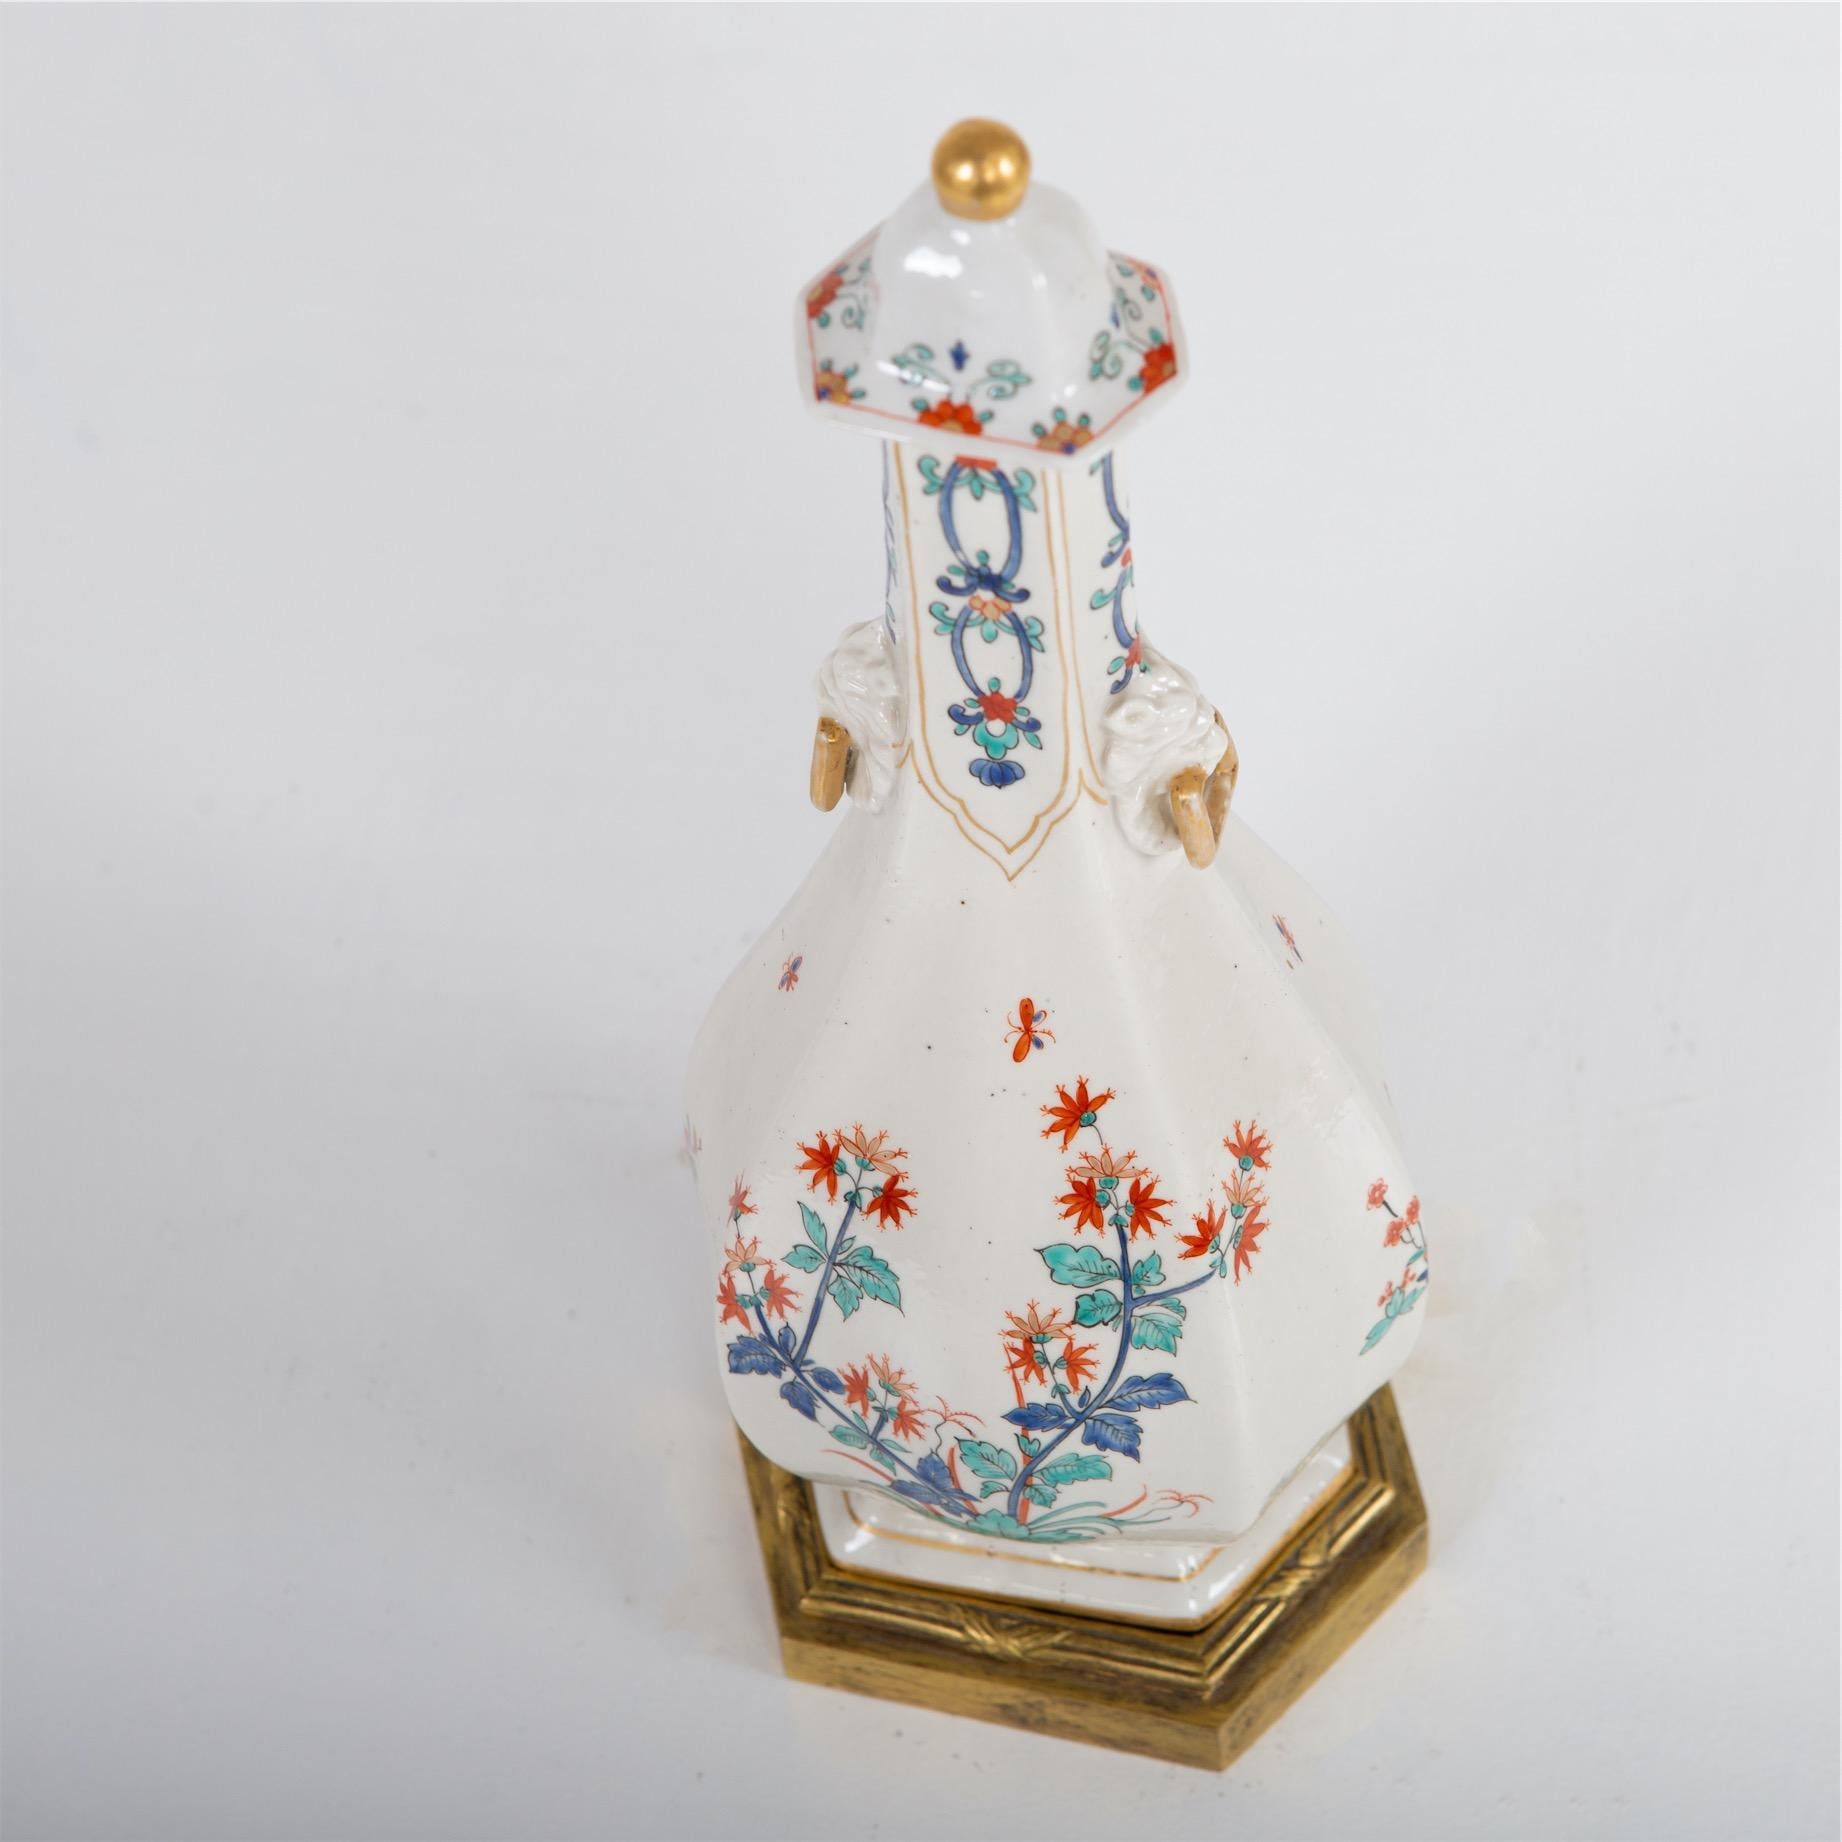 French Porcelain Sake Bottle, Probably Chantilly, France, 18th Century